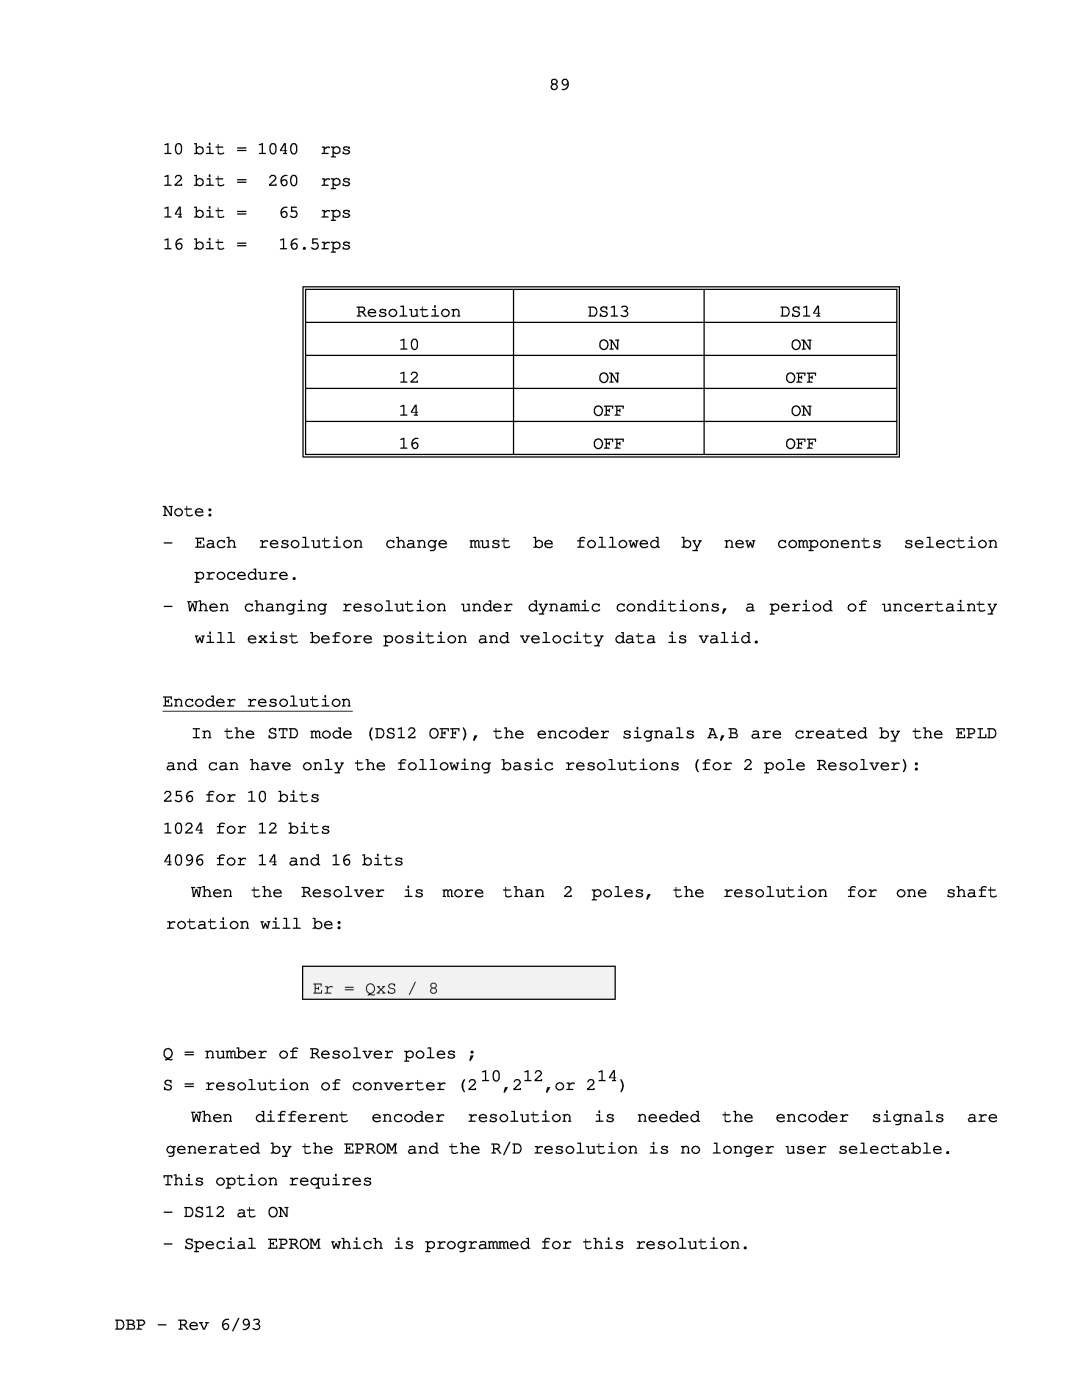 Elmo DBP SERIES manual bit =, 16.5rps, Resolution, DS13, DS14, Encoder resolution, for 10 bits 1024 for 12 bits, DS12 at ON 